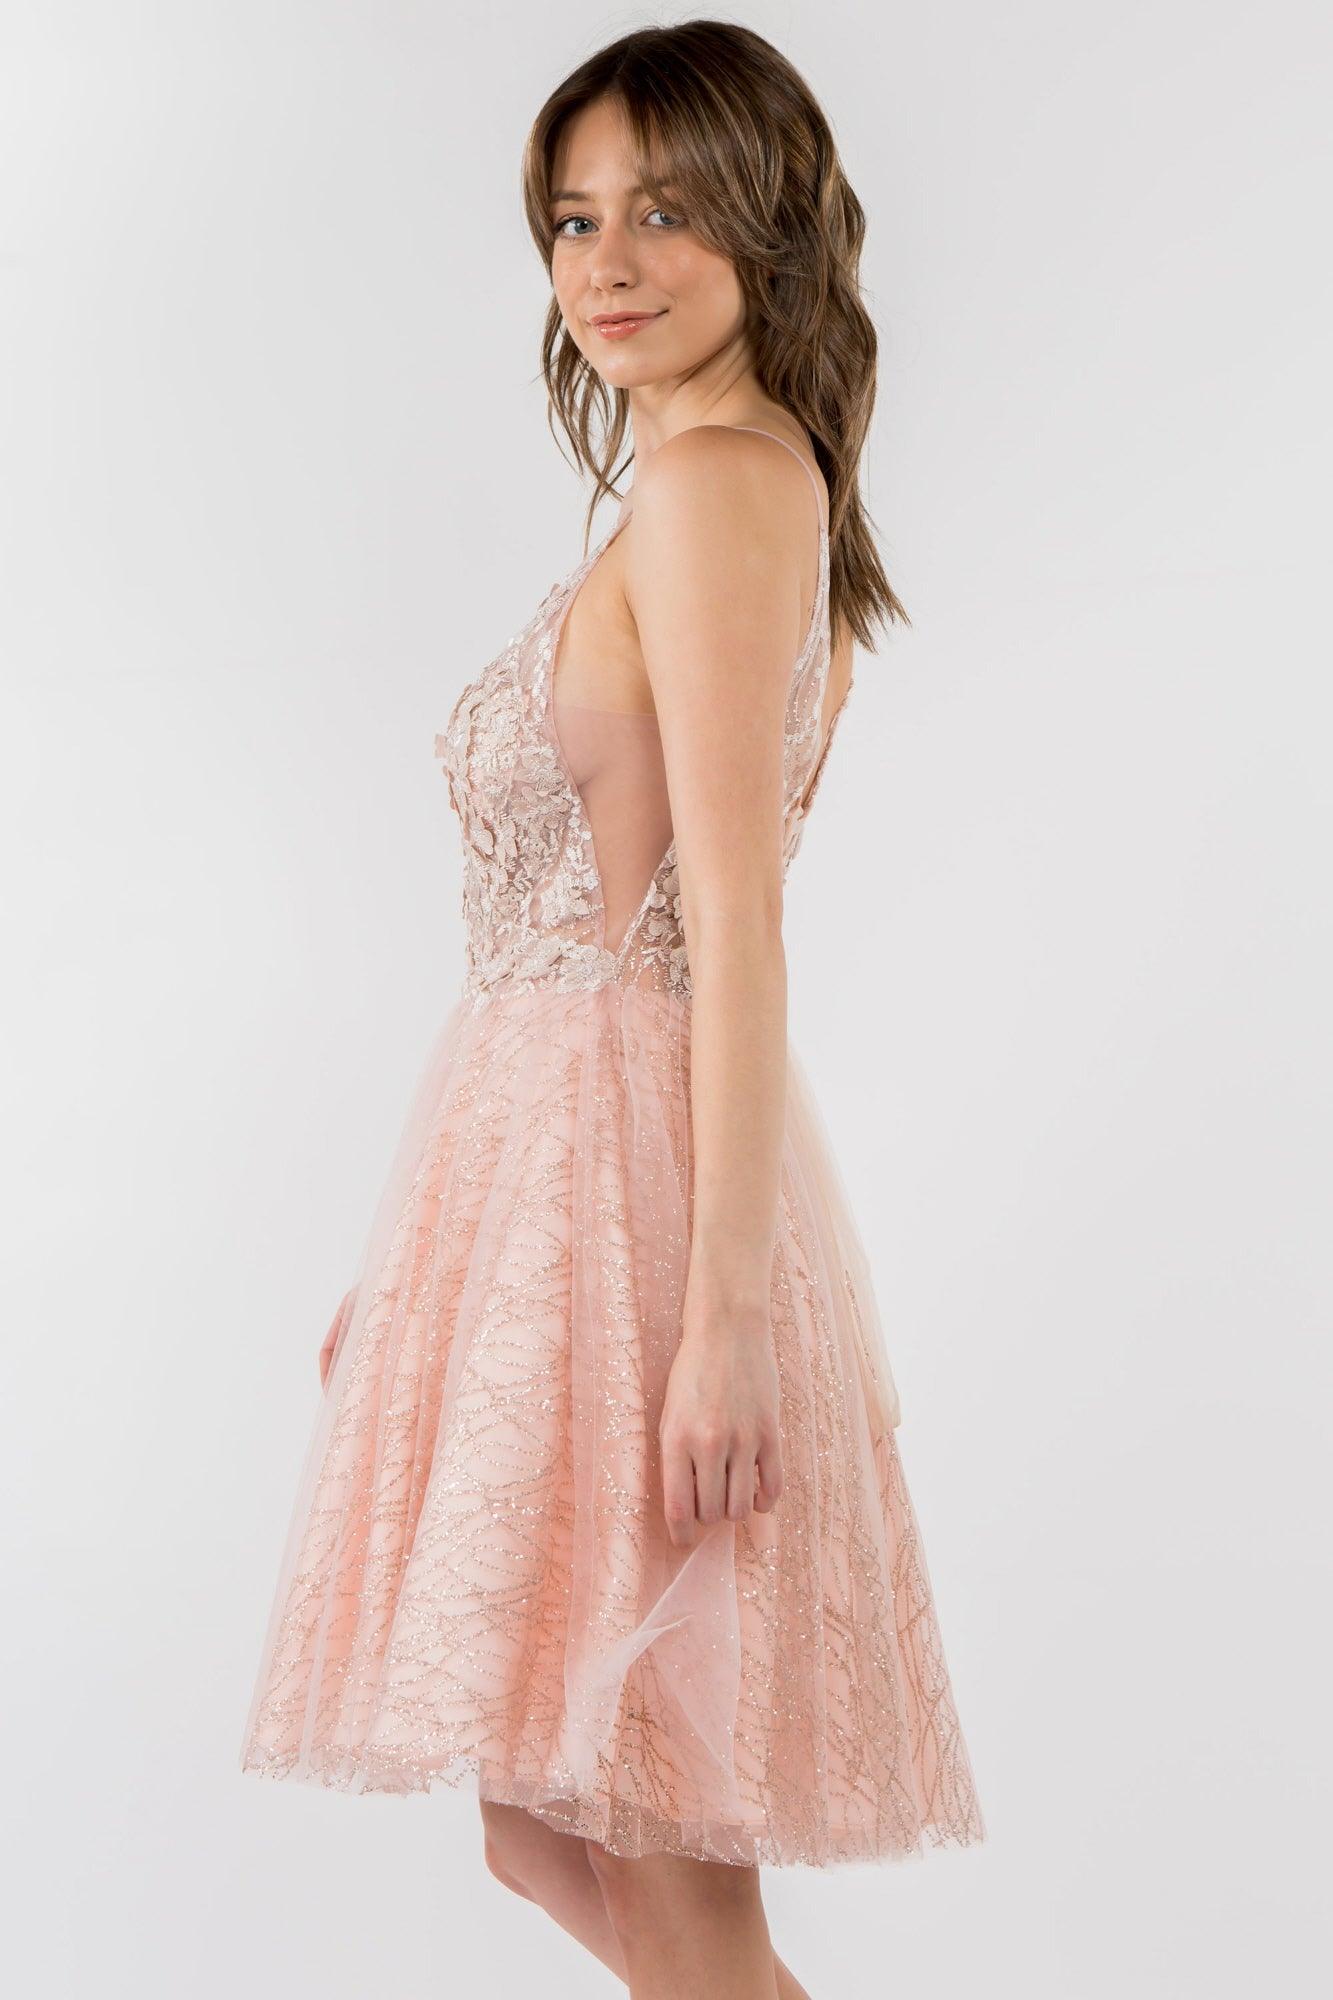 3D Floral Applique Short Homecoming Dress - The Dress Outlet